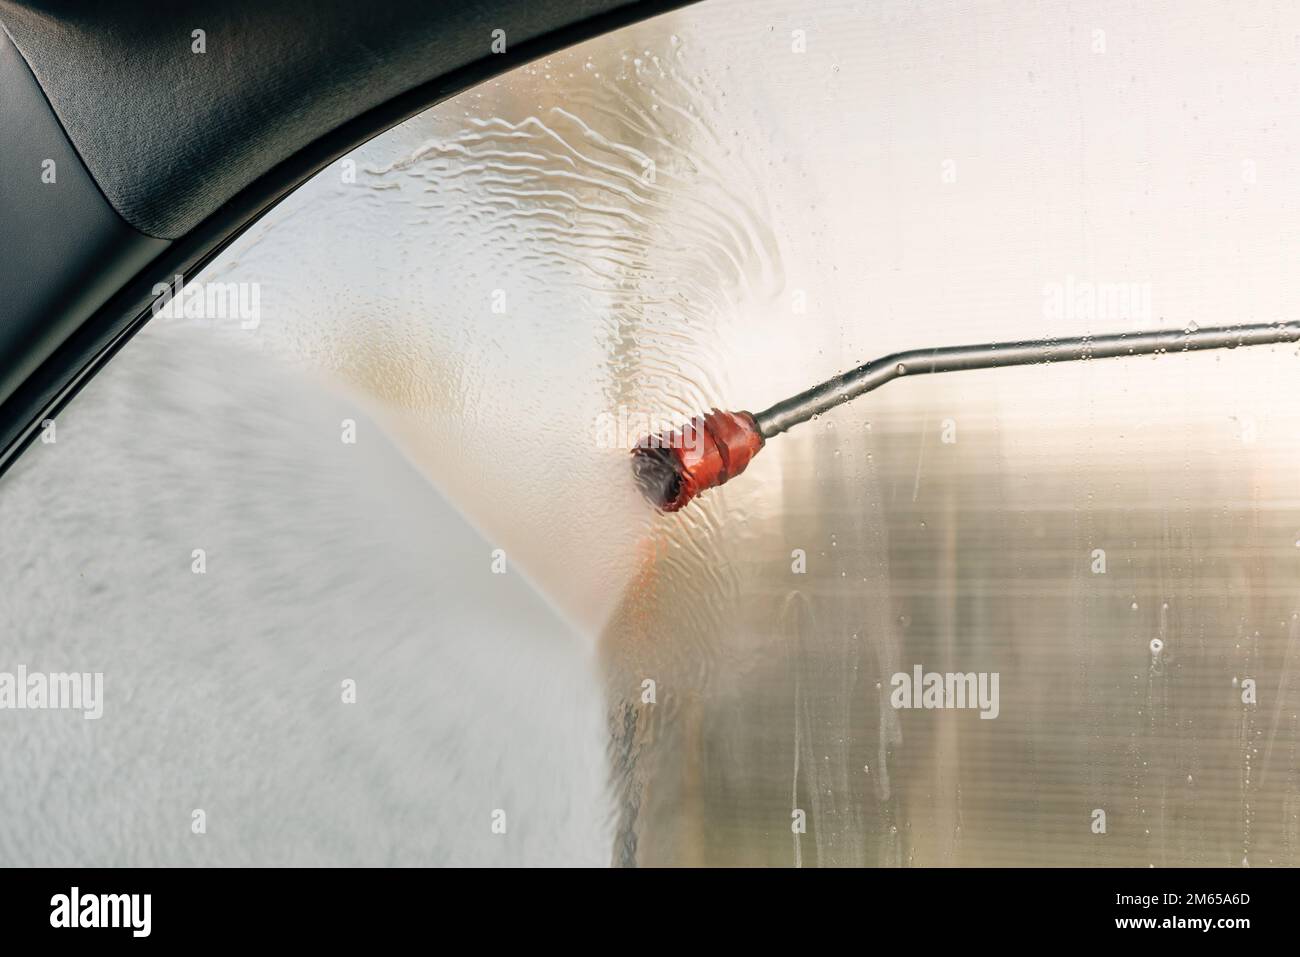 High pressure water gun jet sprayer in carwash self-service, selective focus Stock Photo